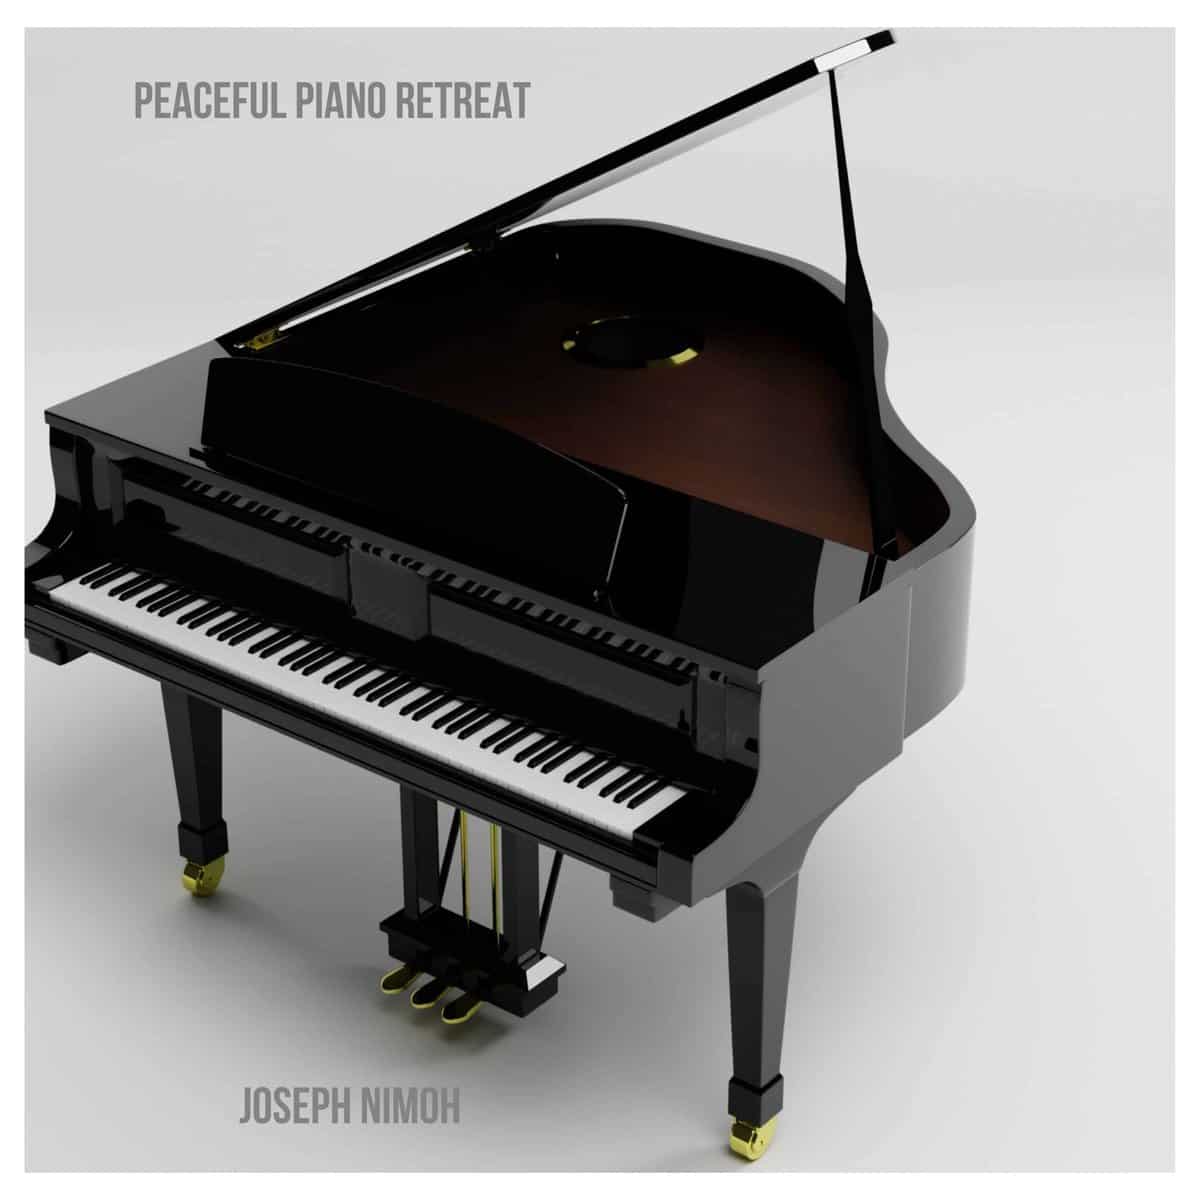 Cover image "Peaceful Piano Retreat" by Joseph Nimoh